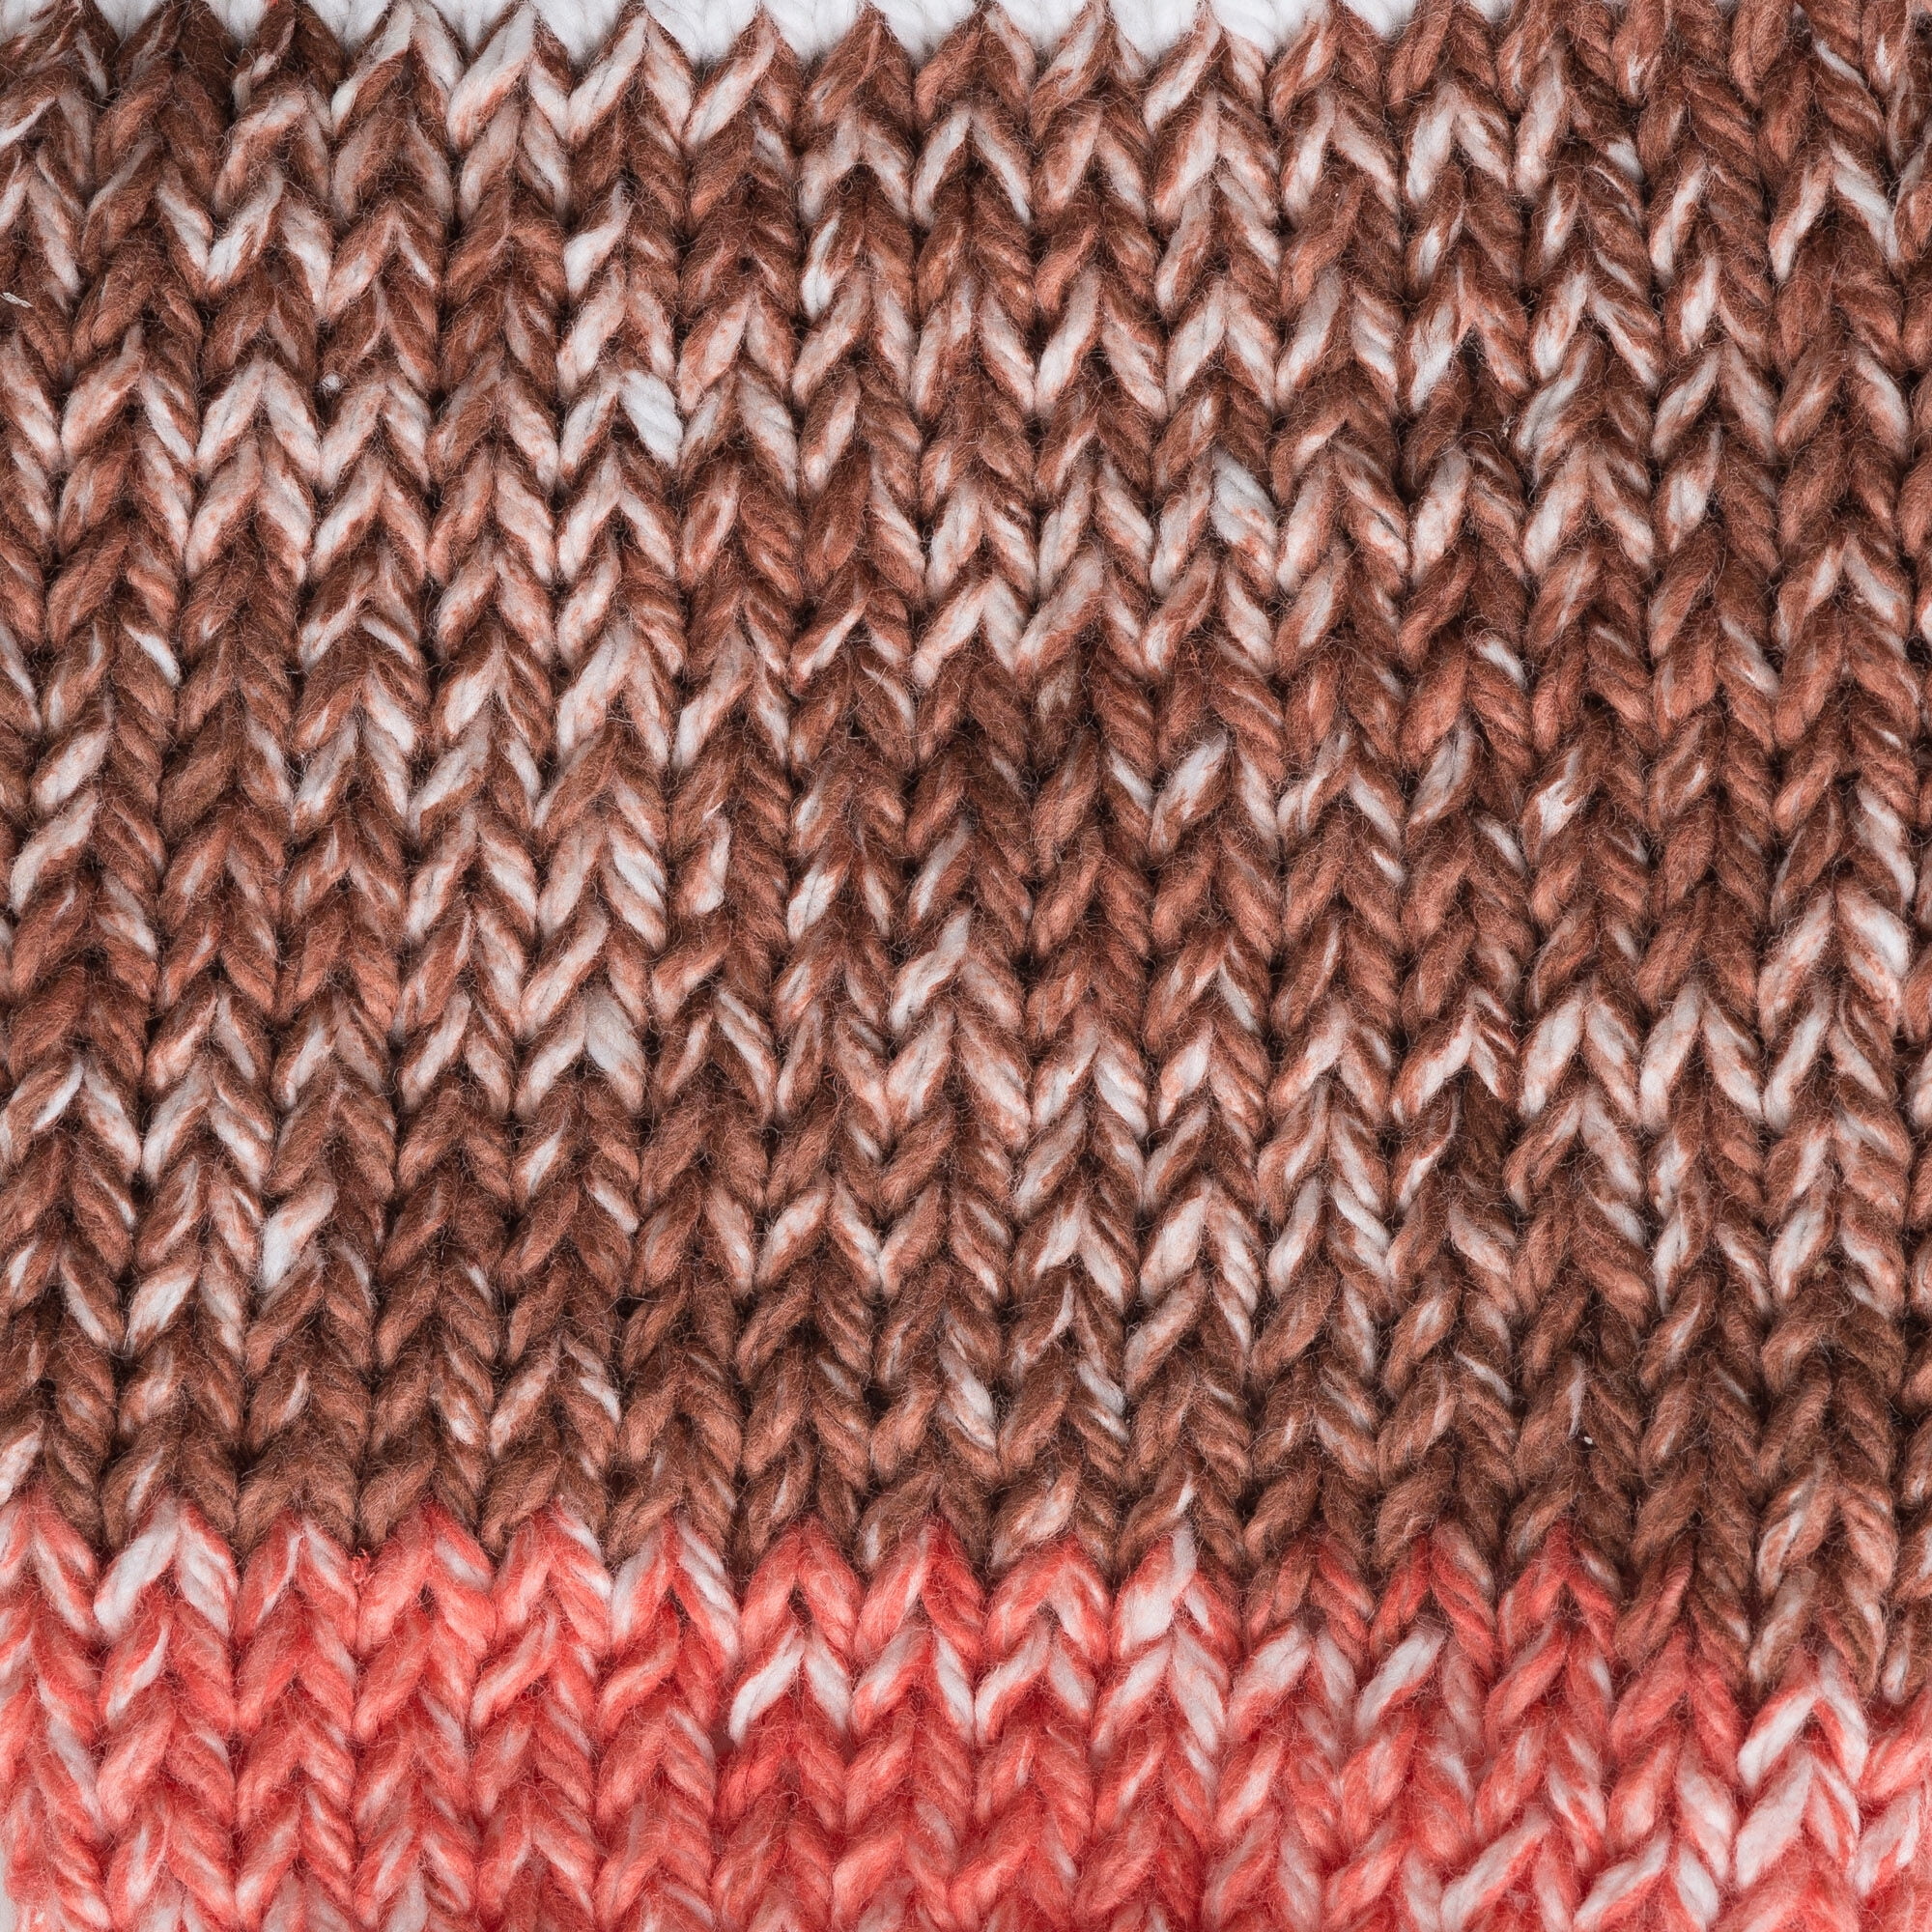 Lily Sugar and Cream Cotton Yarn, Natural Stripes, 285 Foot